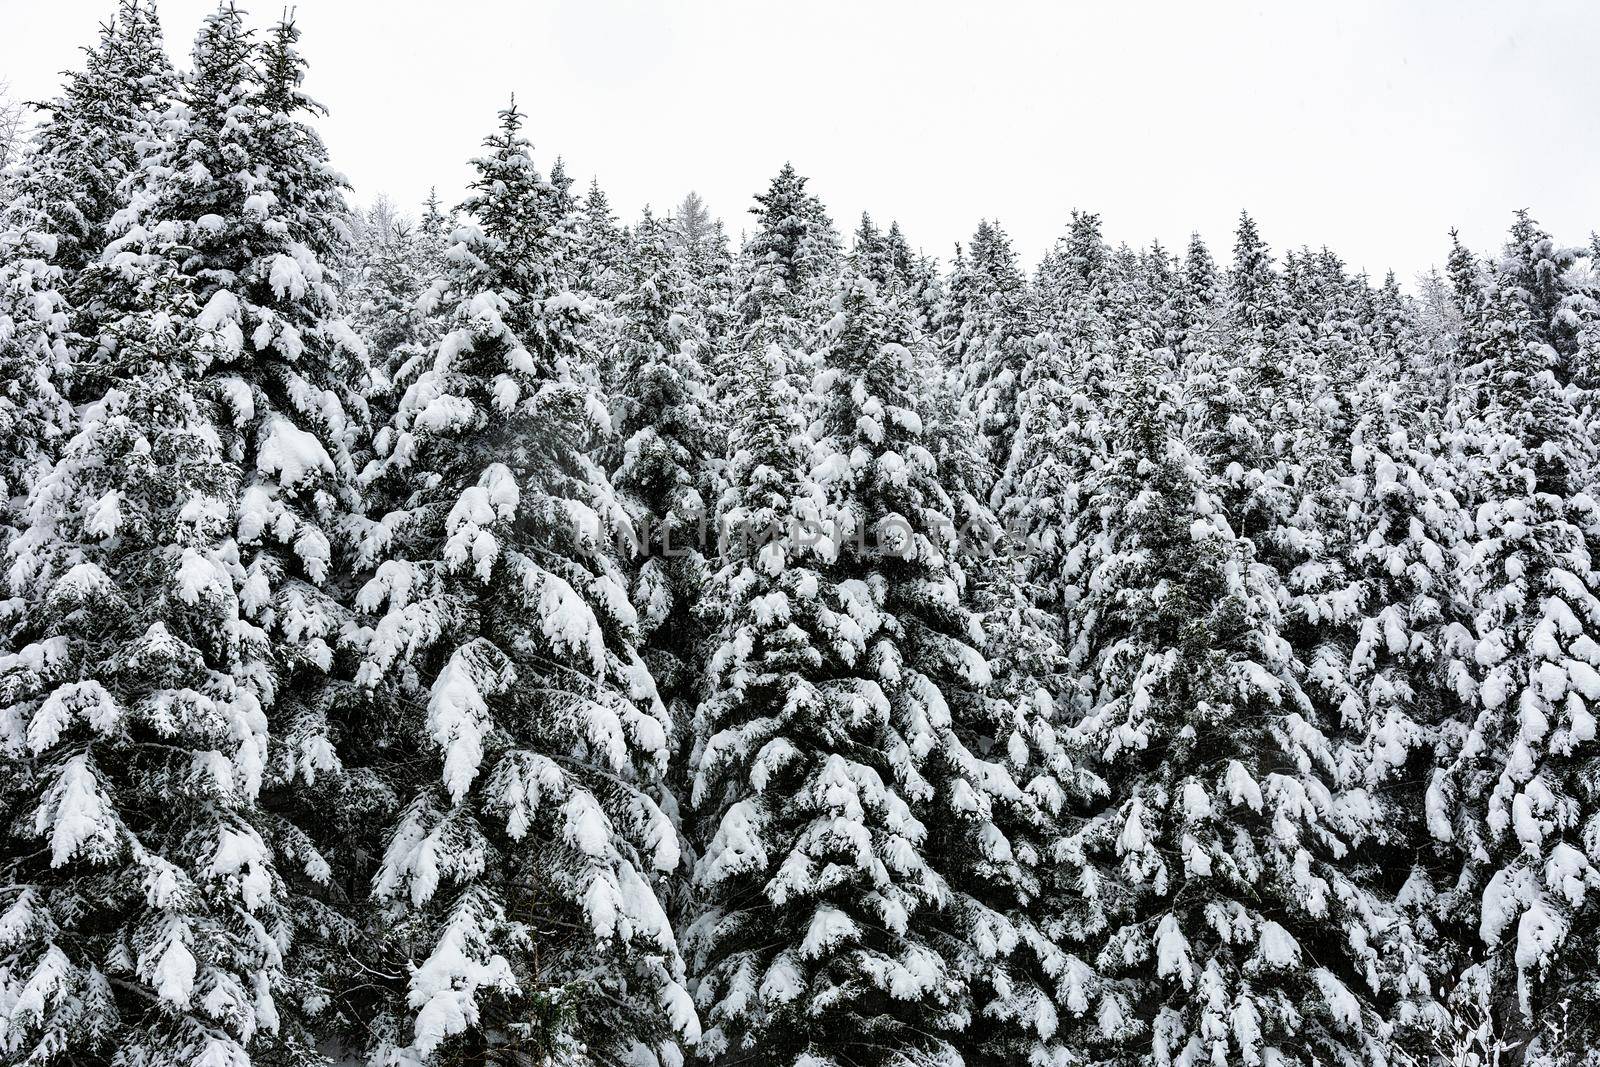 Spruce trees in winter by wdnet_studio